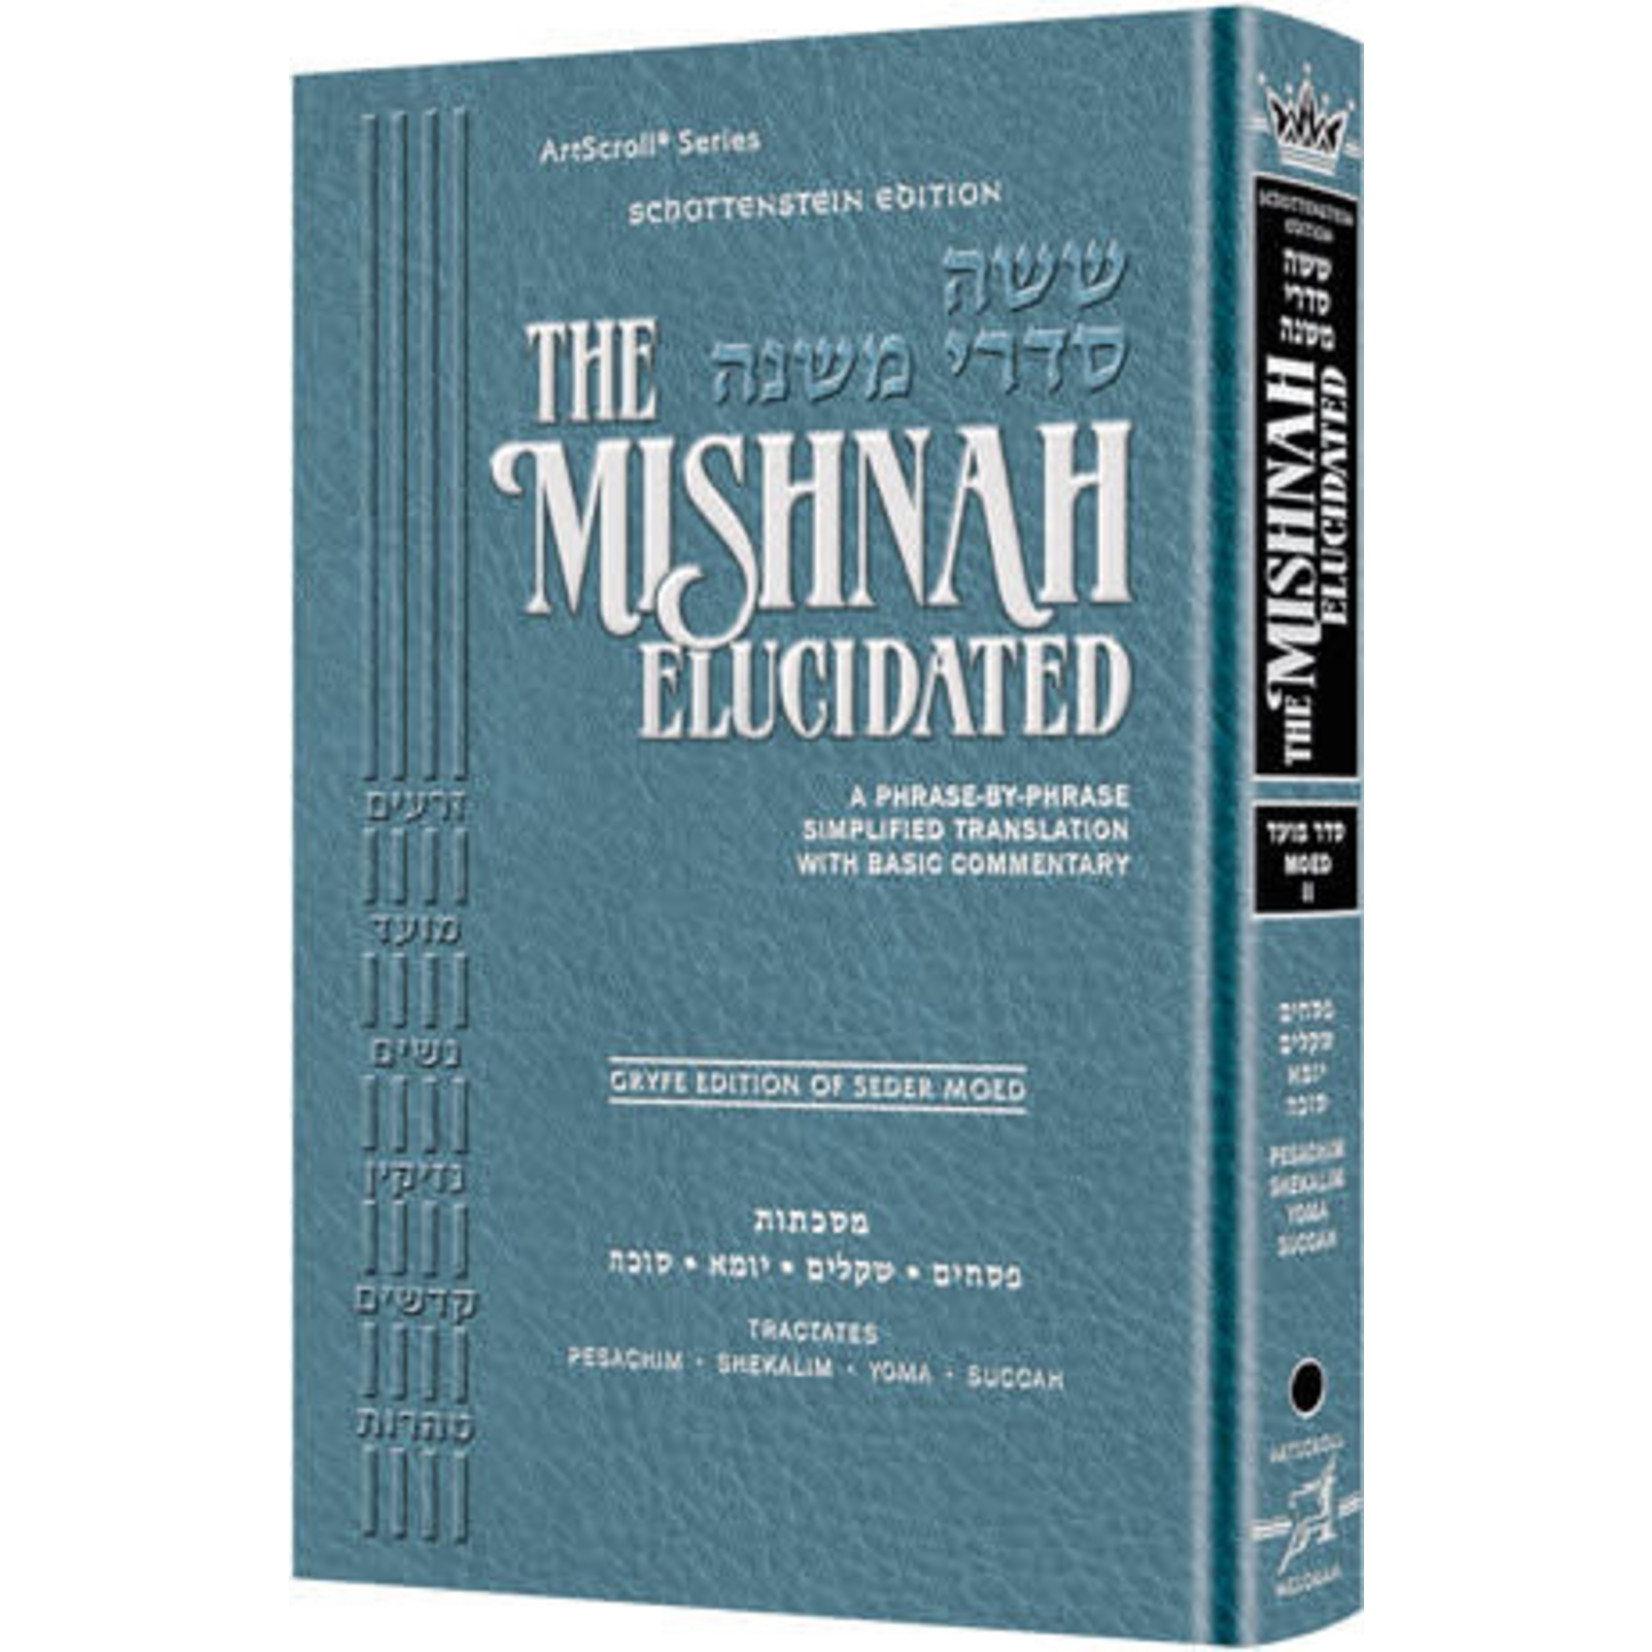 Moed Vol. 2 - ArtScroll Schottenstein Edition Hebrew/English Elucidated Mishnah, Full Size